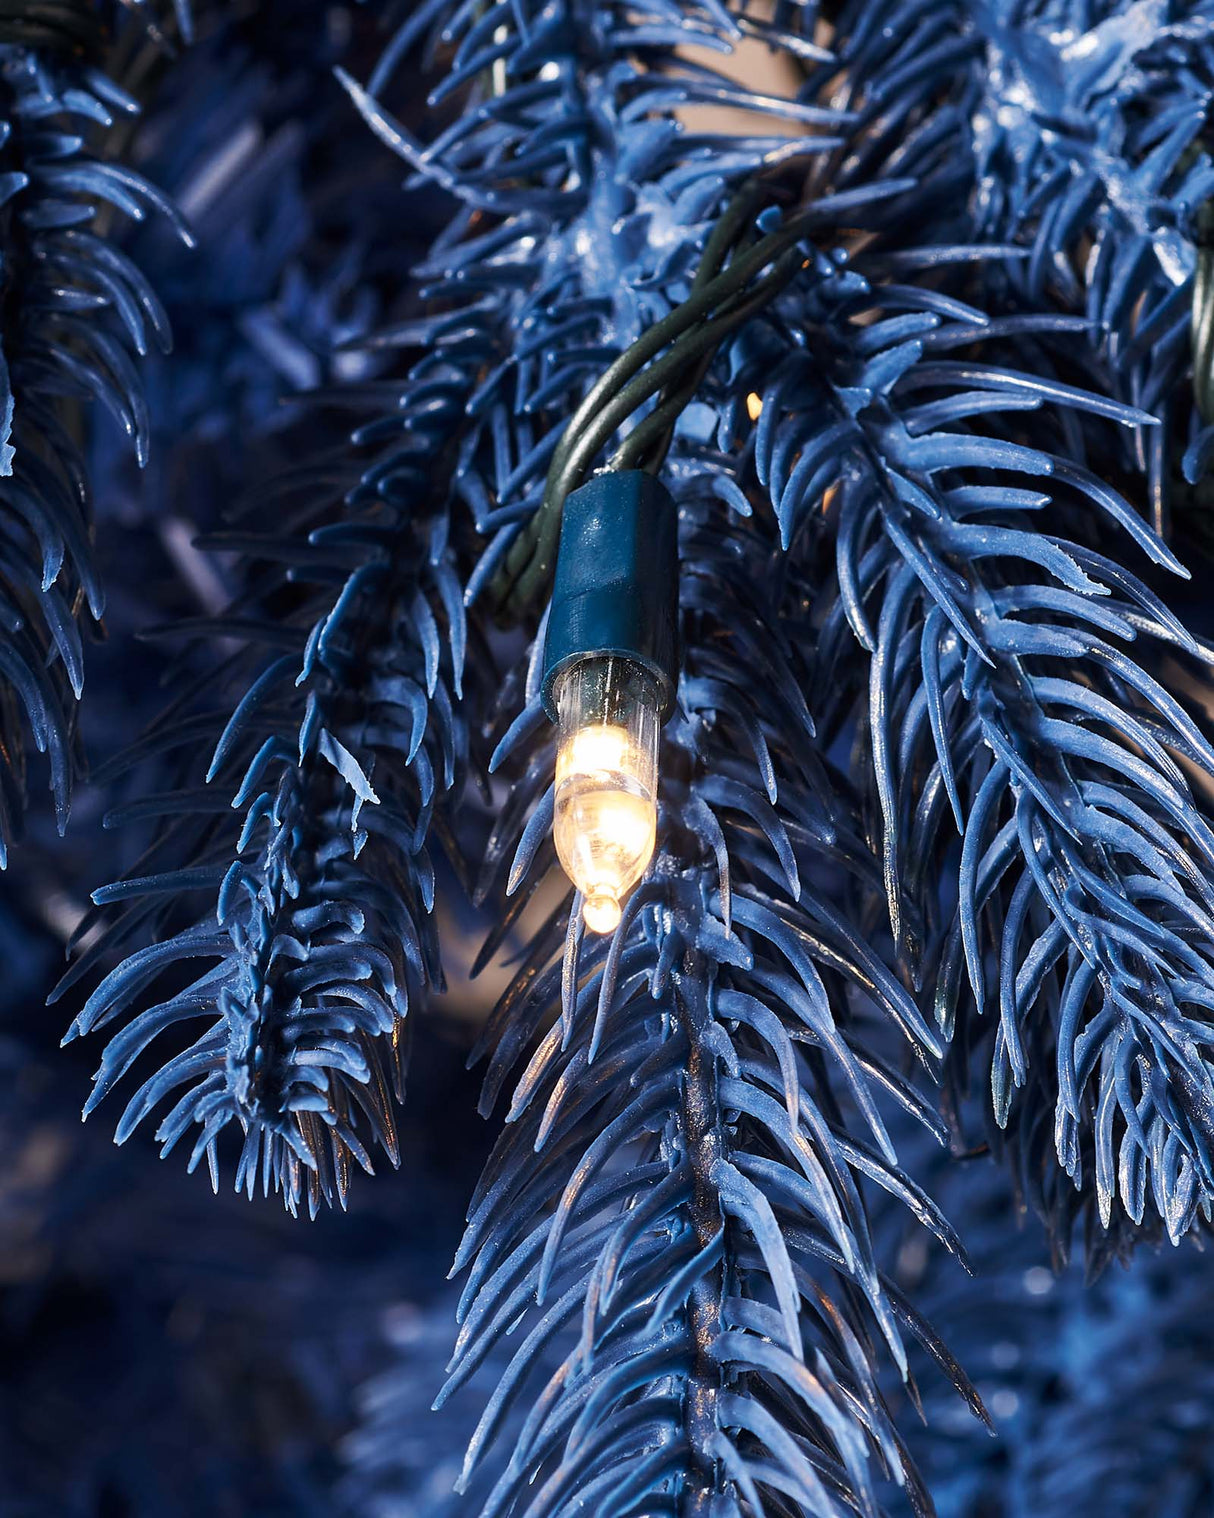 Pre-Lit Sapphire Blue Christmas Tree, 7 ft